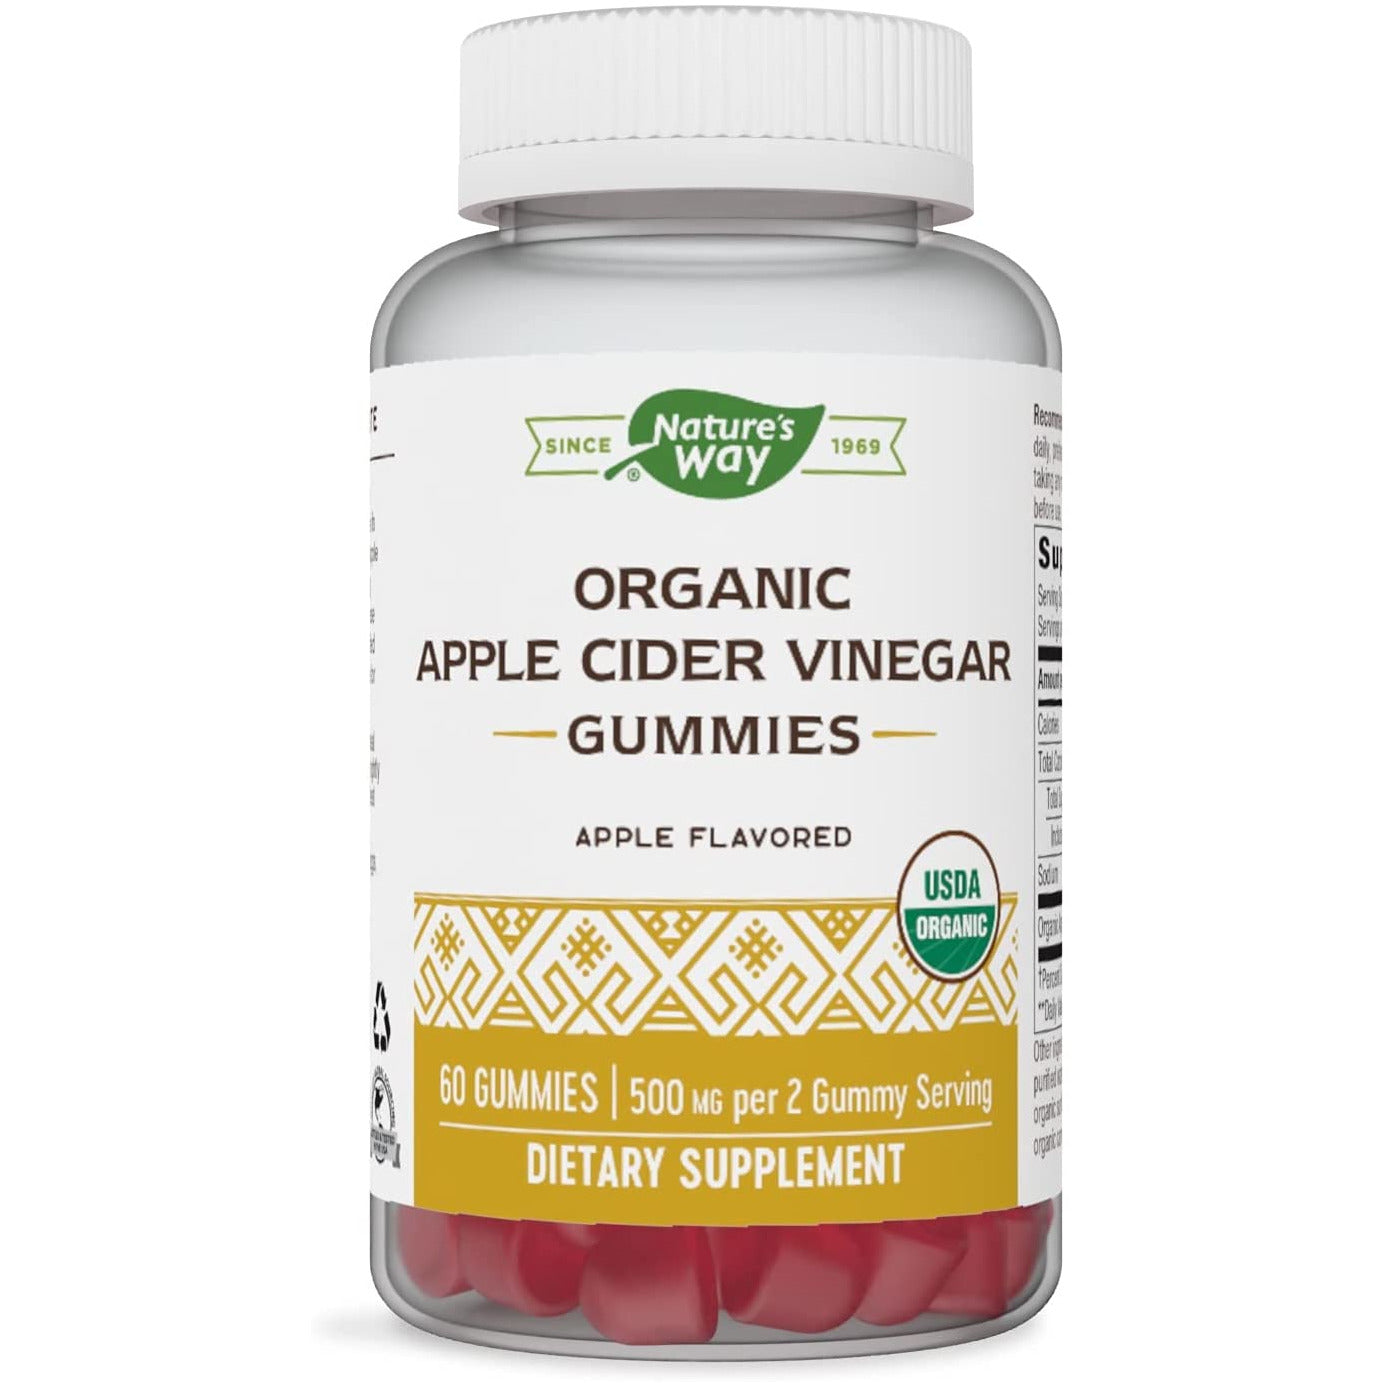 Nature’s Way Organic Apple Cider Vinegar Gummies